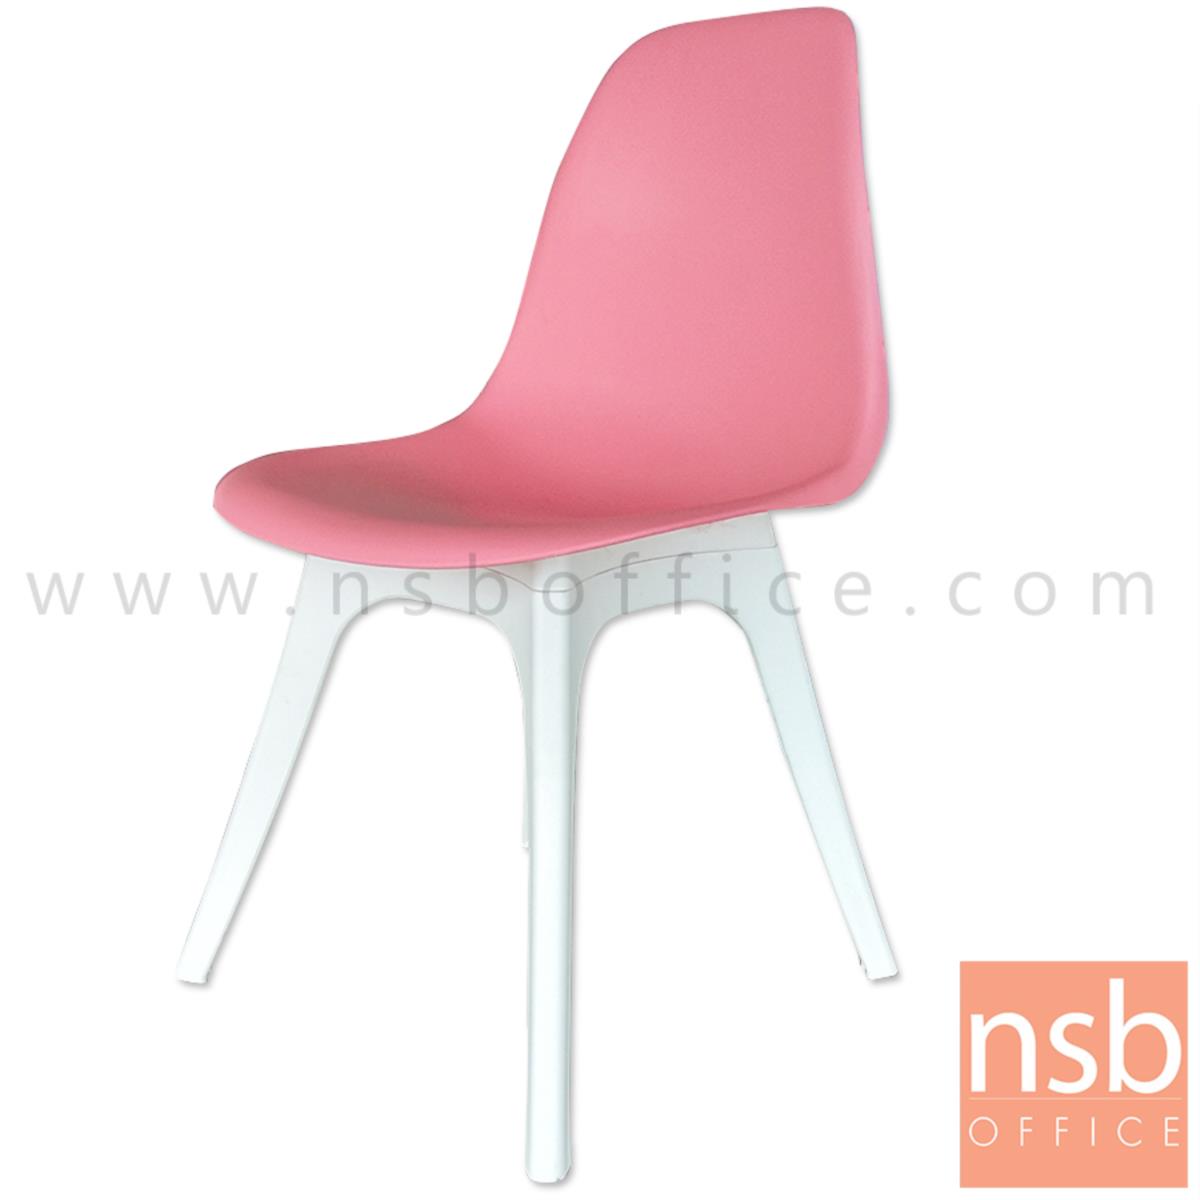 B29A278:เก้าอี้โมเดิร์นพลาสติกสีสัน รุ่น Maceo (มาซิโอ) ขนาด 46.6W cm. 